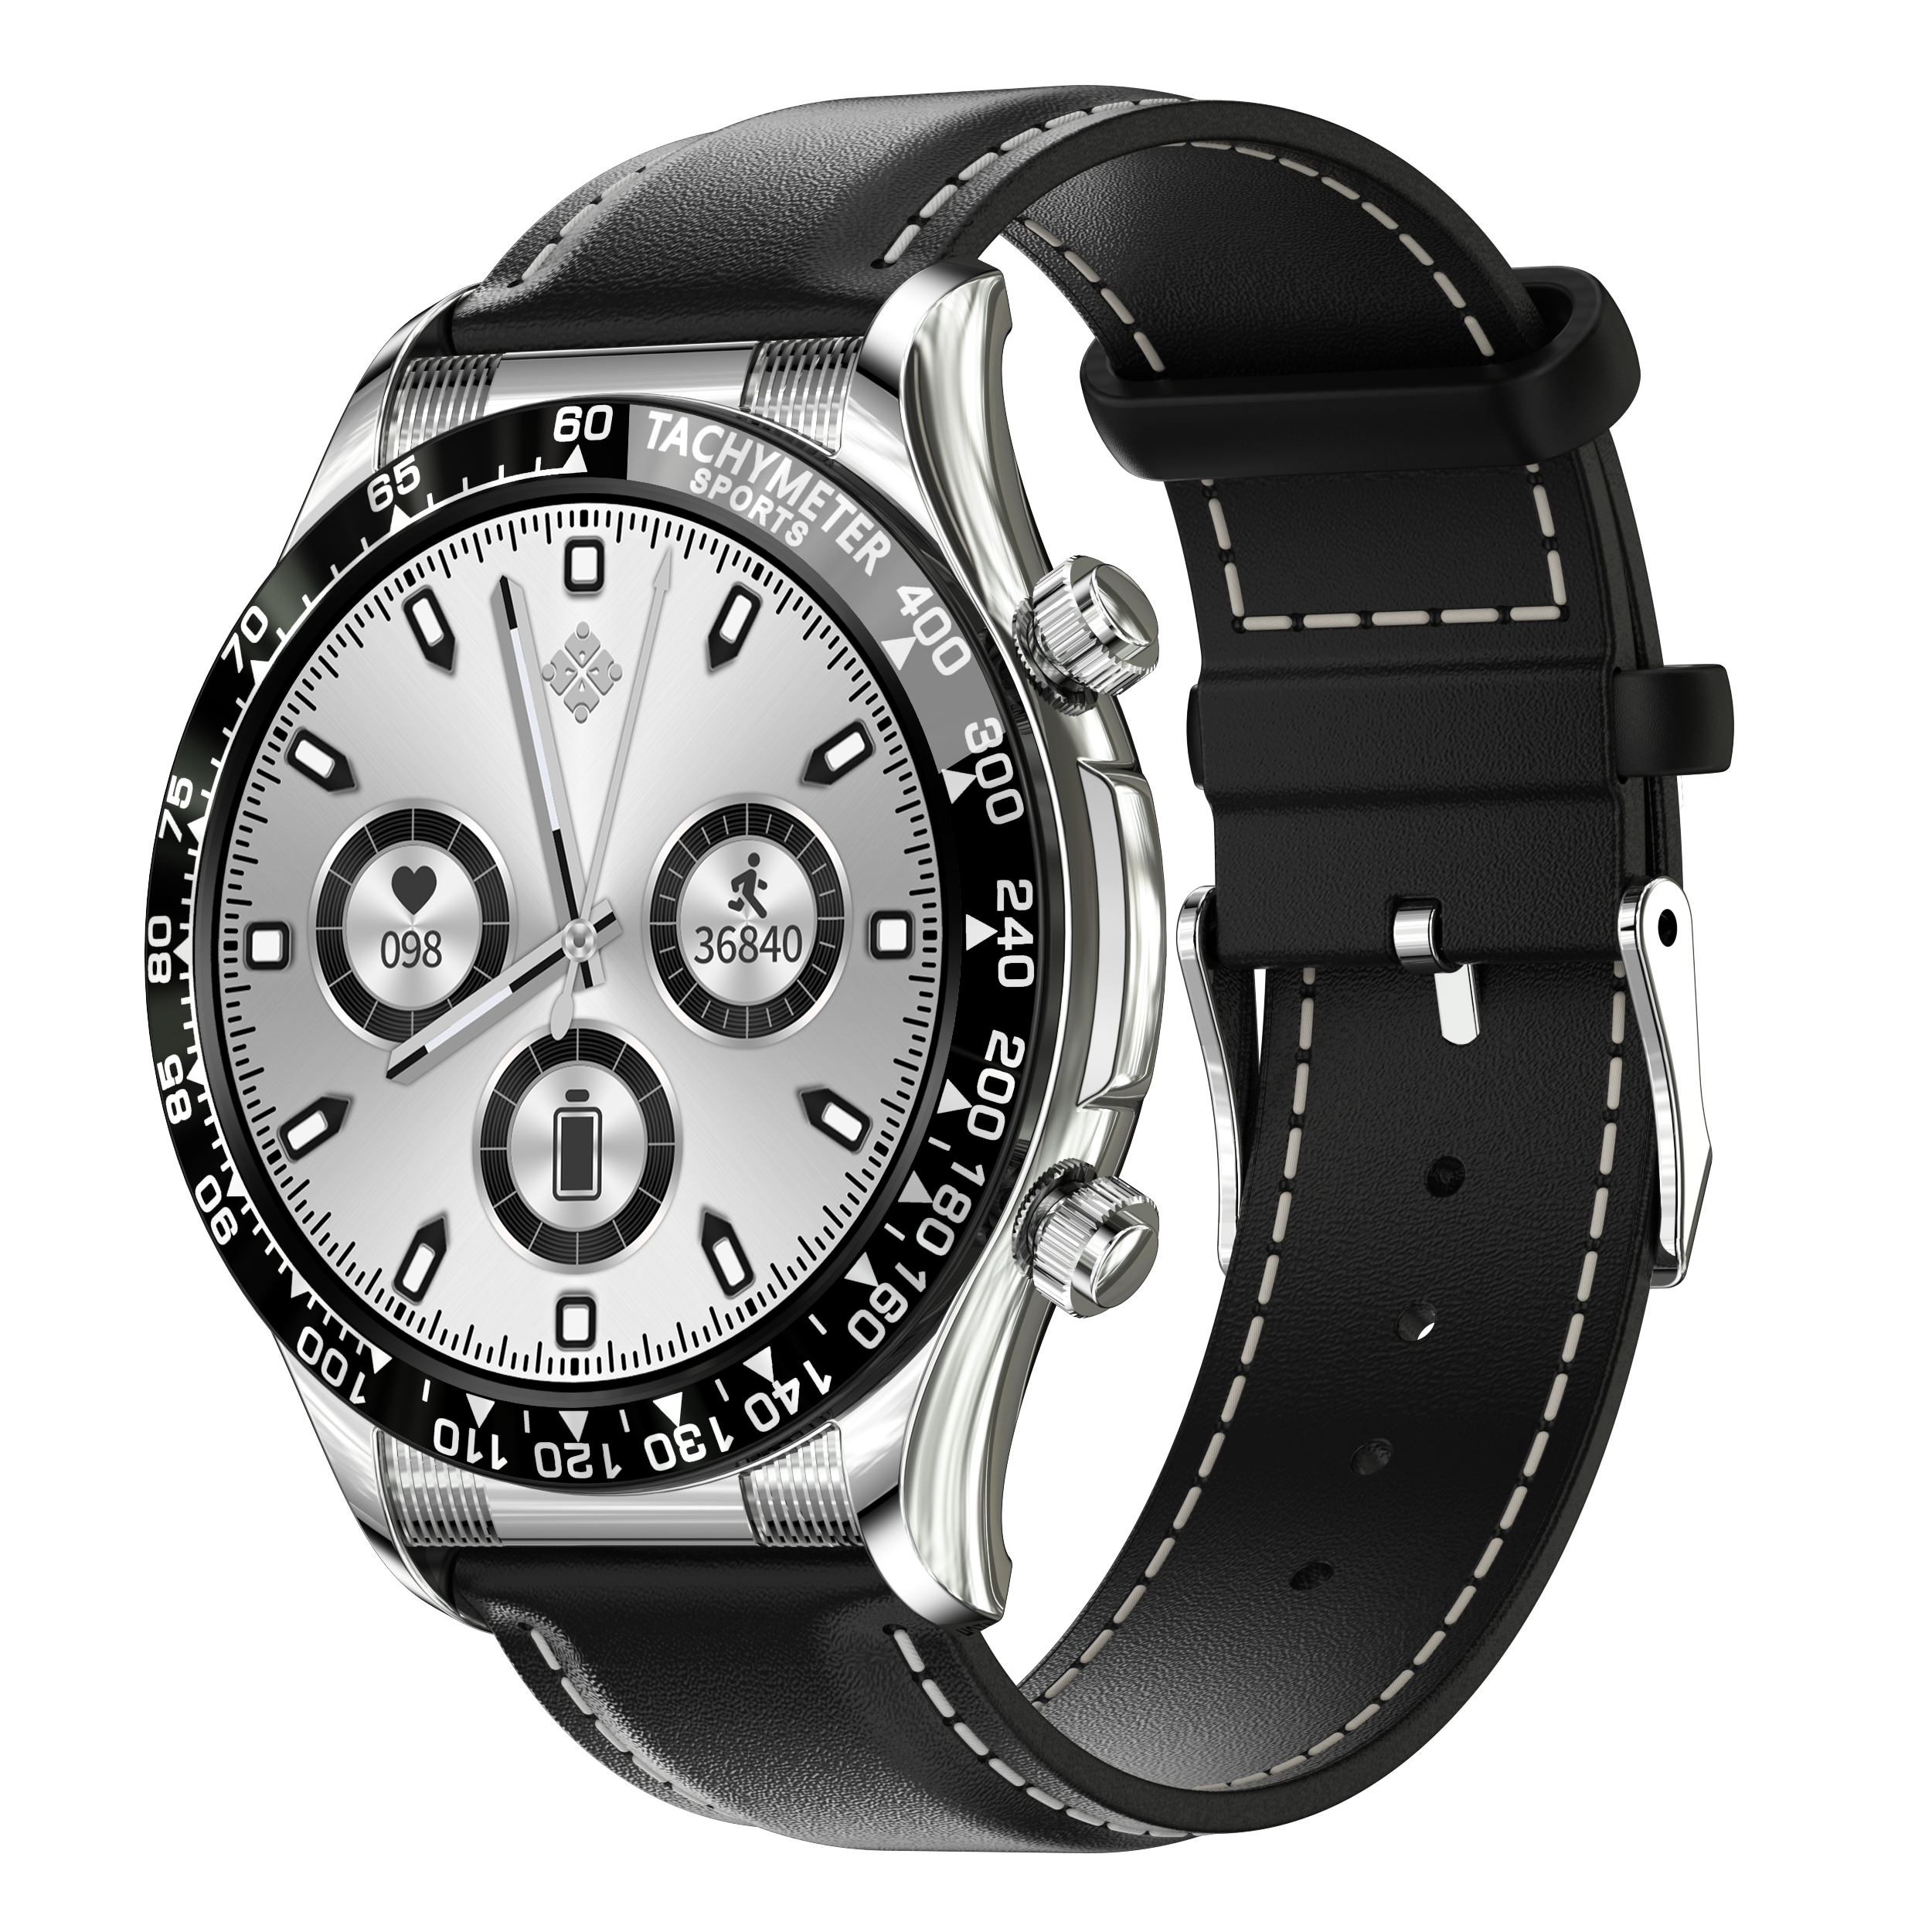 Terra Silver Leather Smartwatch